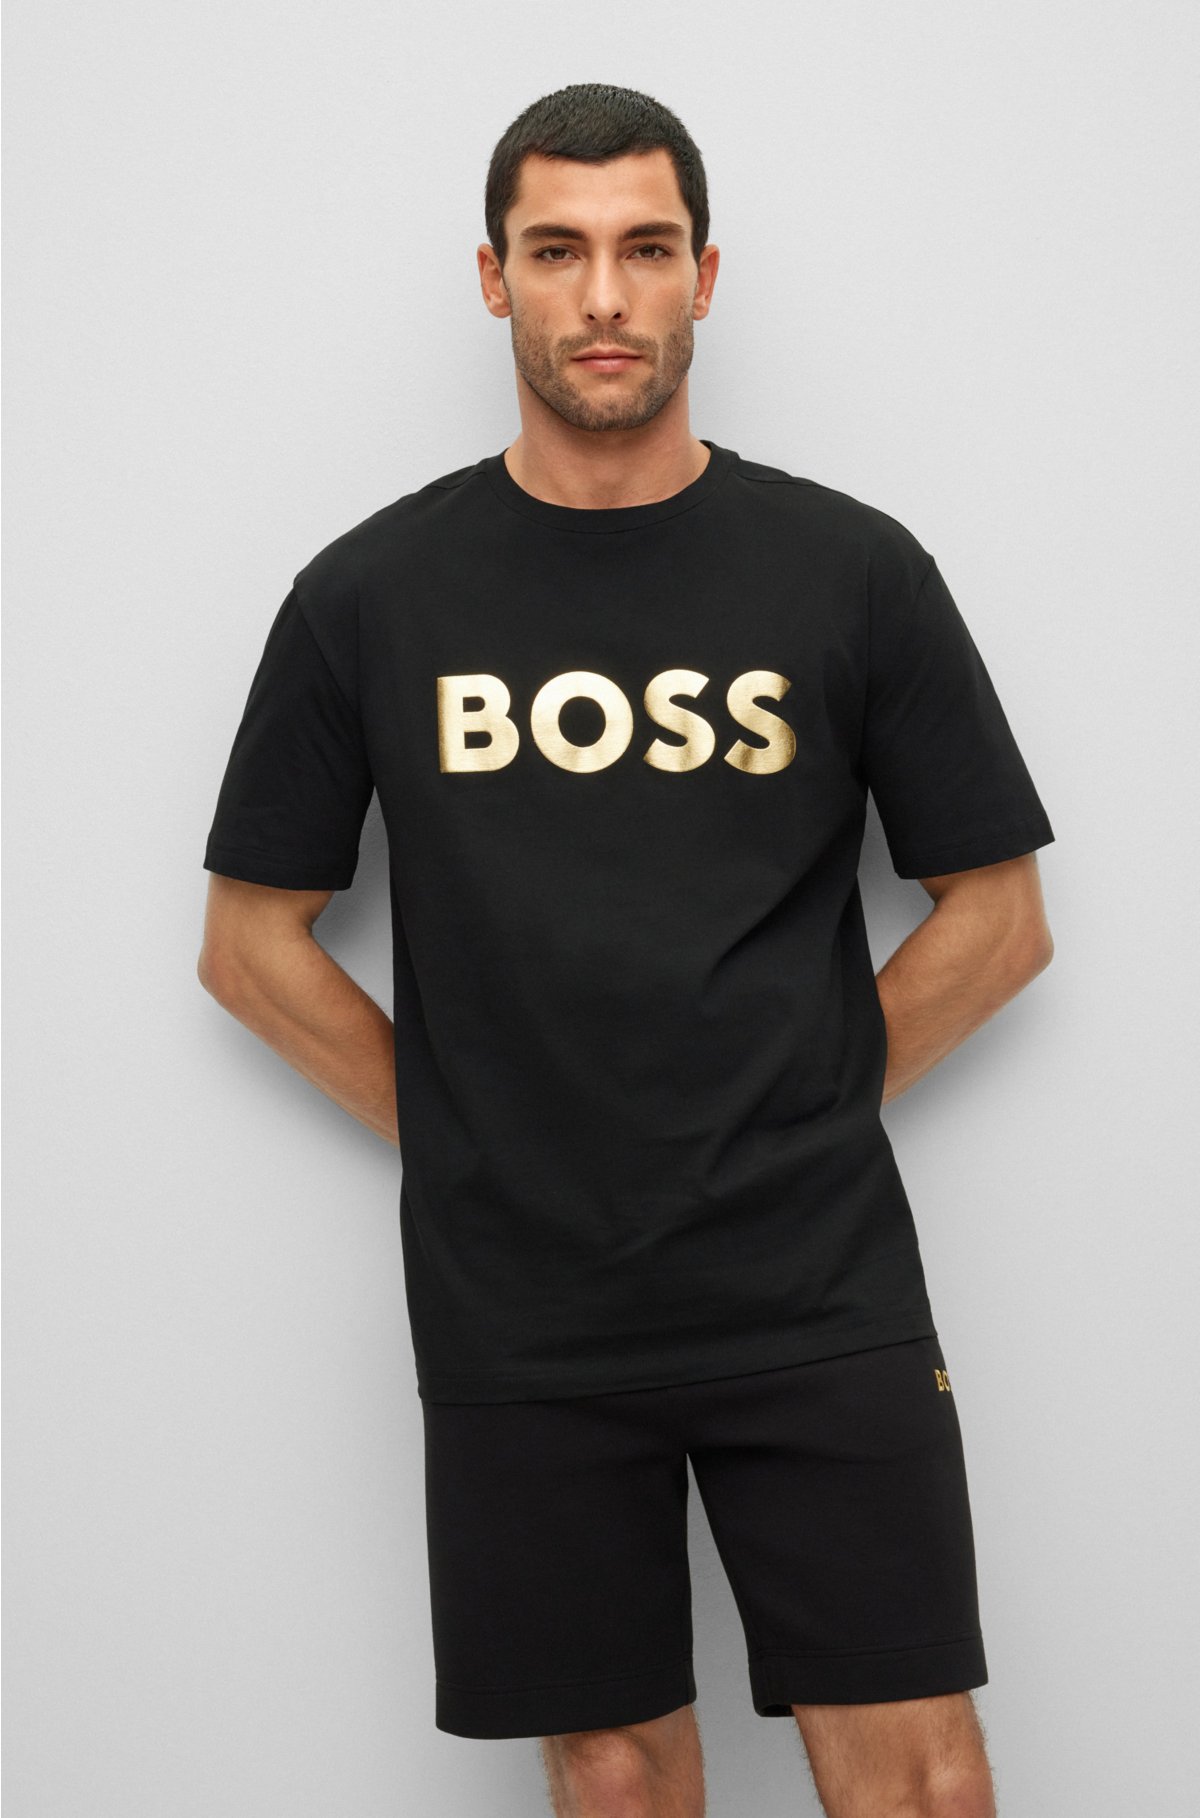 BOSS - T-shirt print Cotton-jersey crew-neck logo with